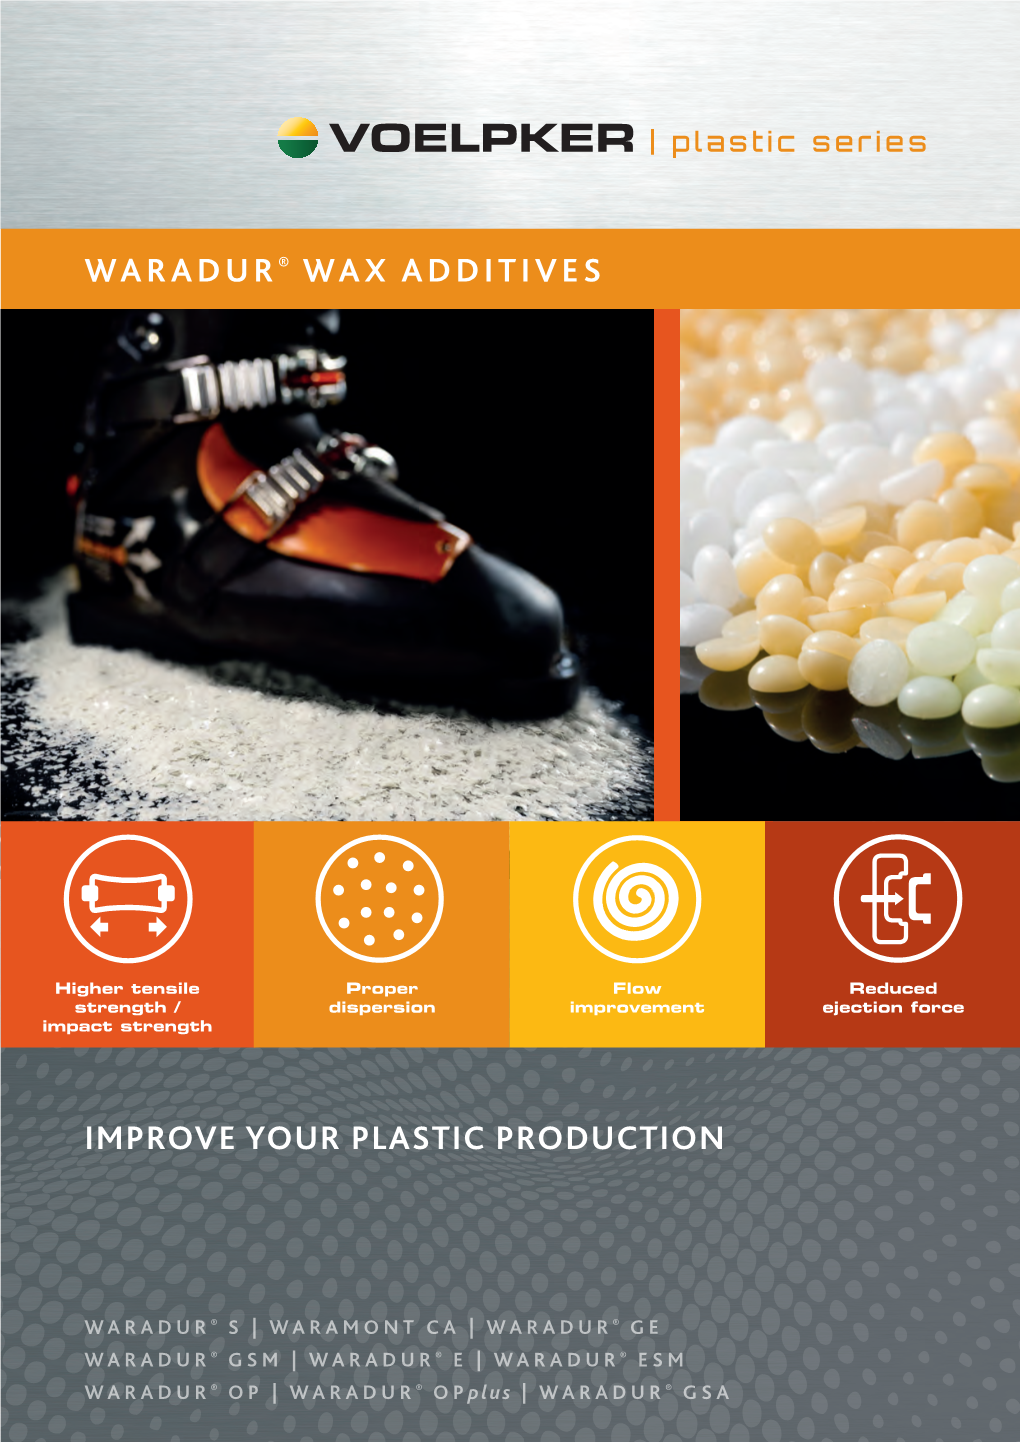 Waradur® Wax Additives Improve Your Plastic